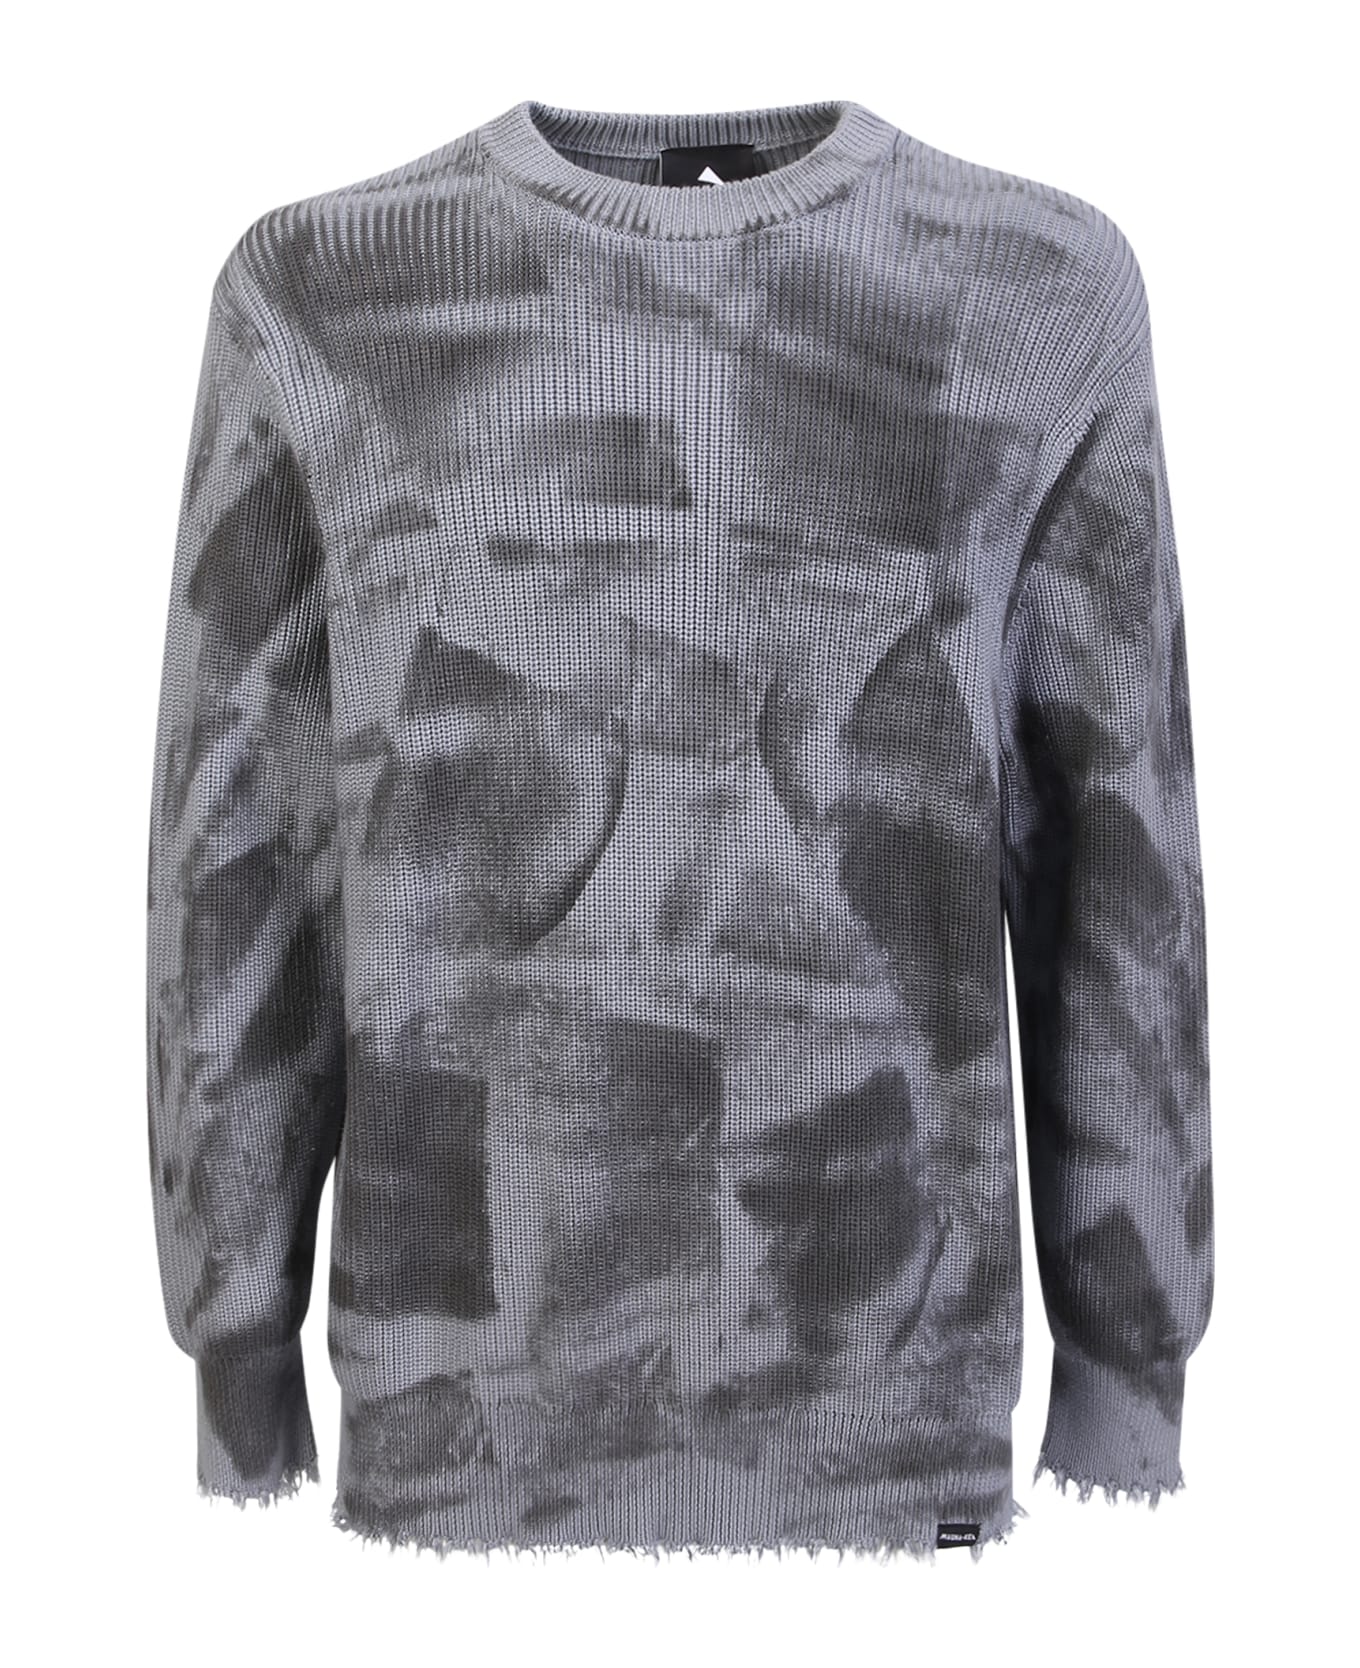 Mauna Kea Cotton Pinture Effect Sweater - Grey ニットウェア